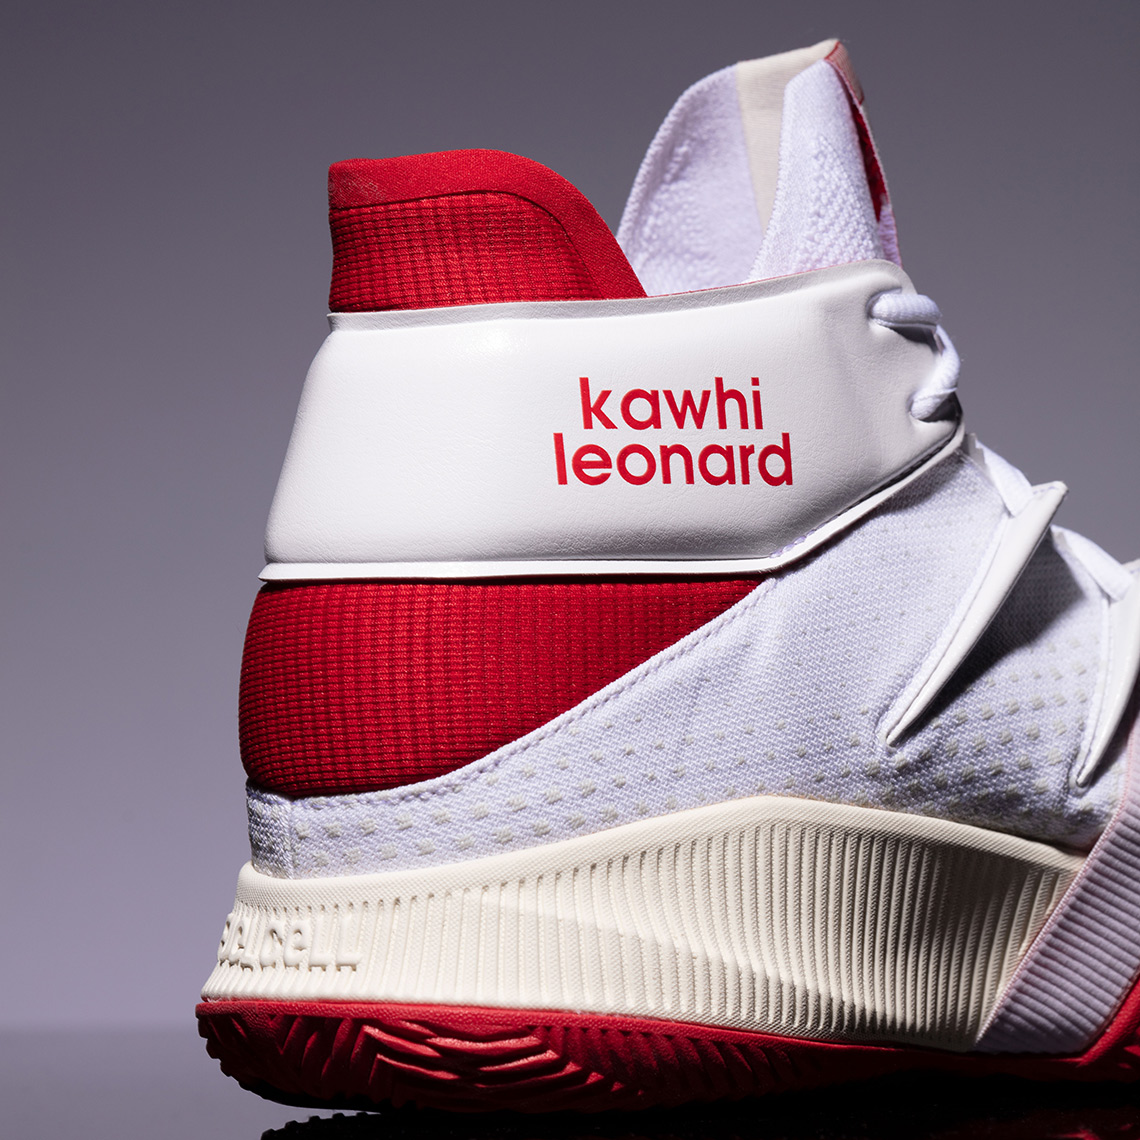 Kawhi Leonard New Balance Shoes - First 